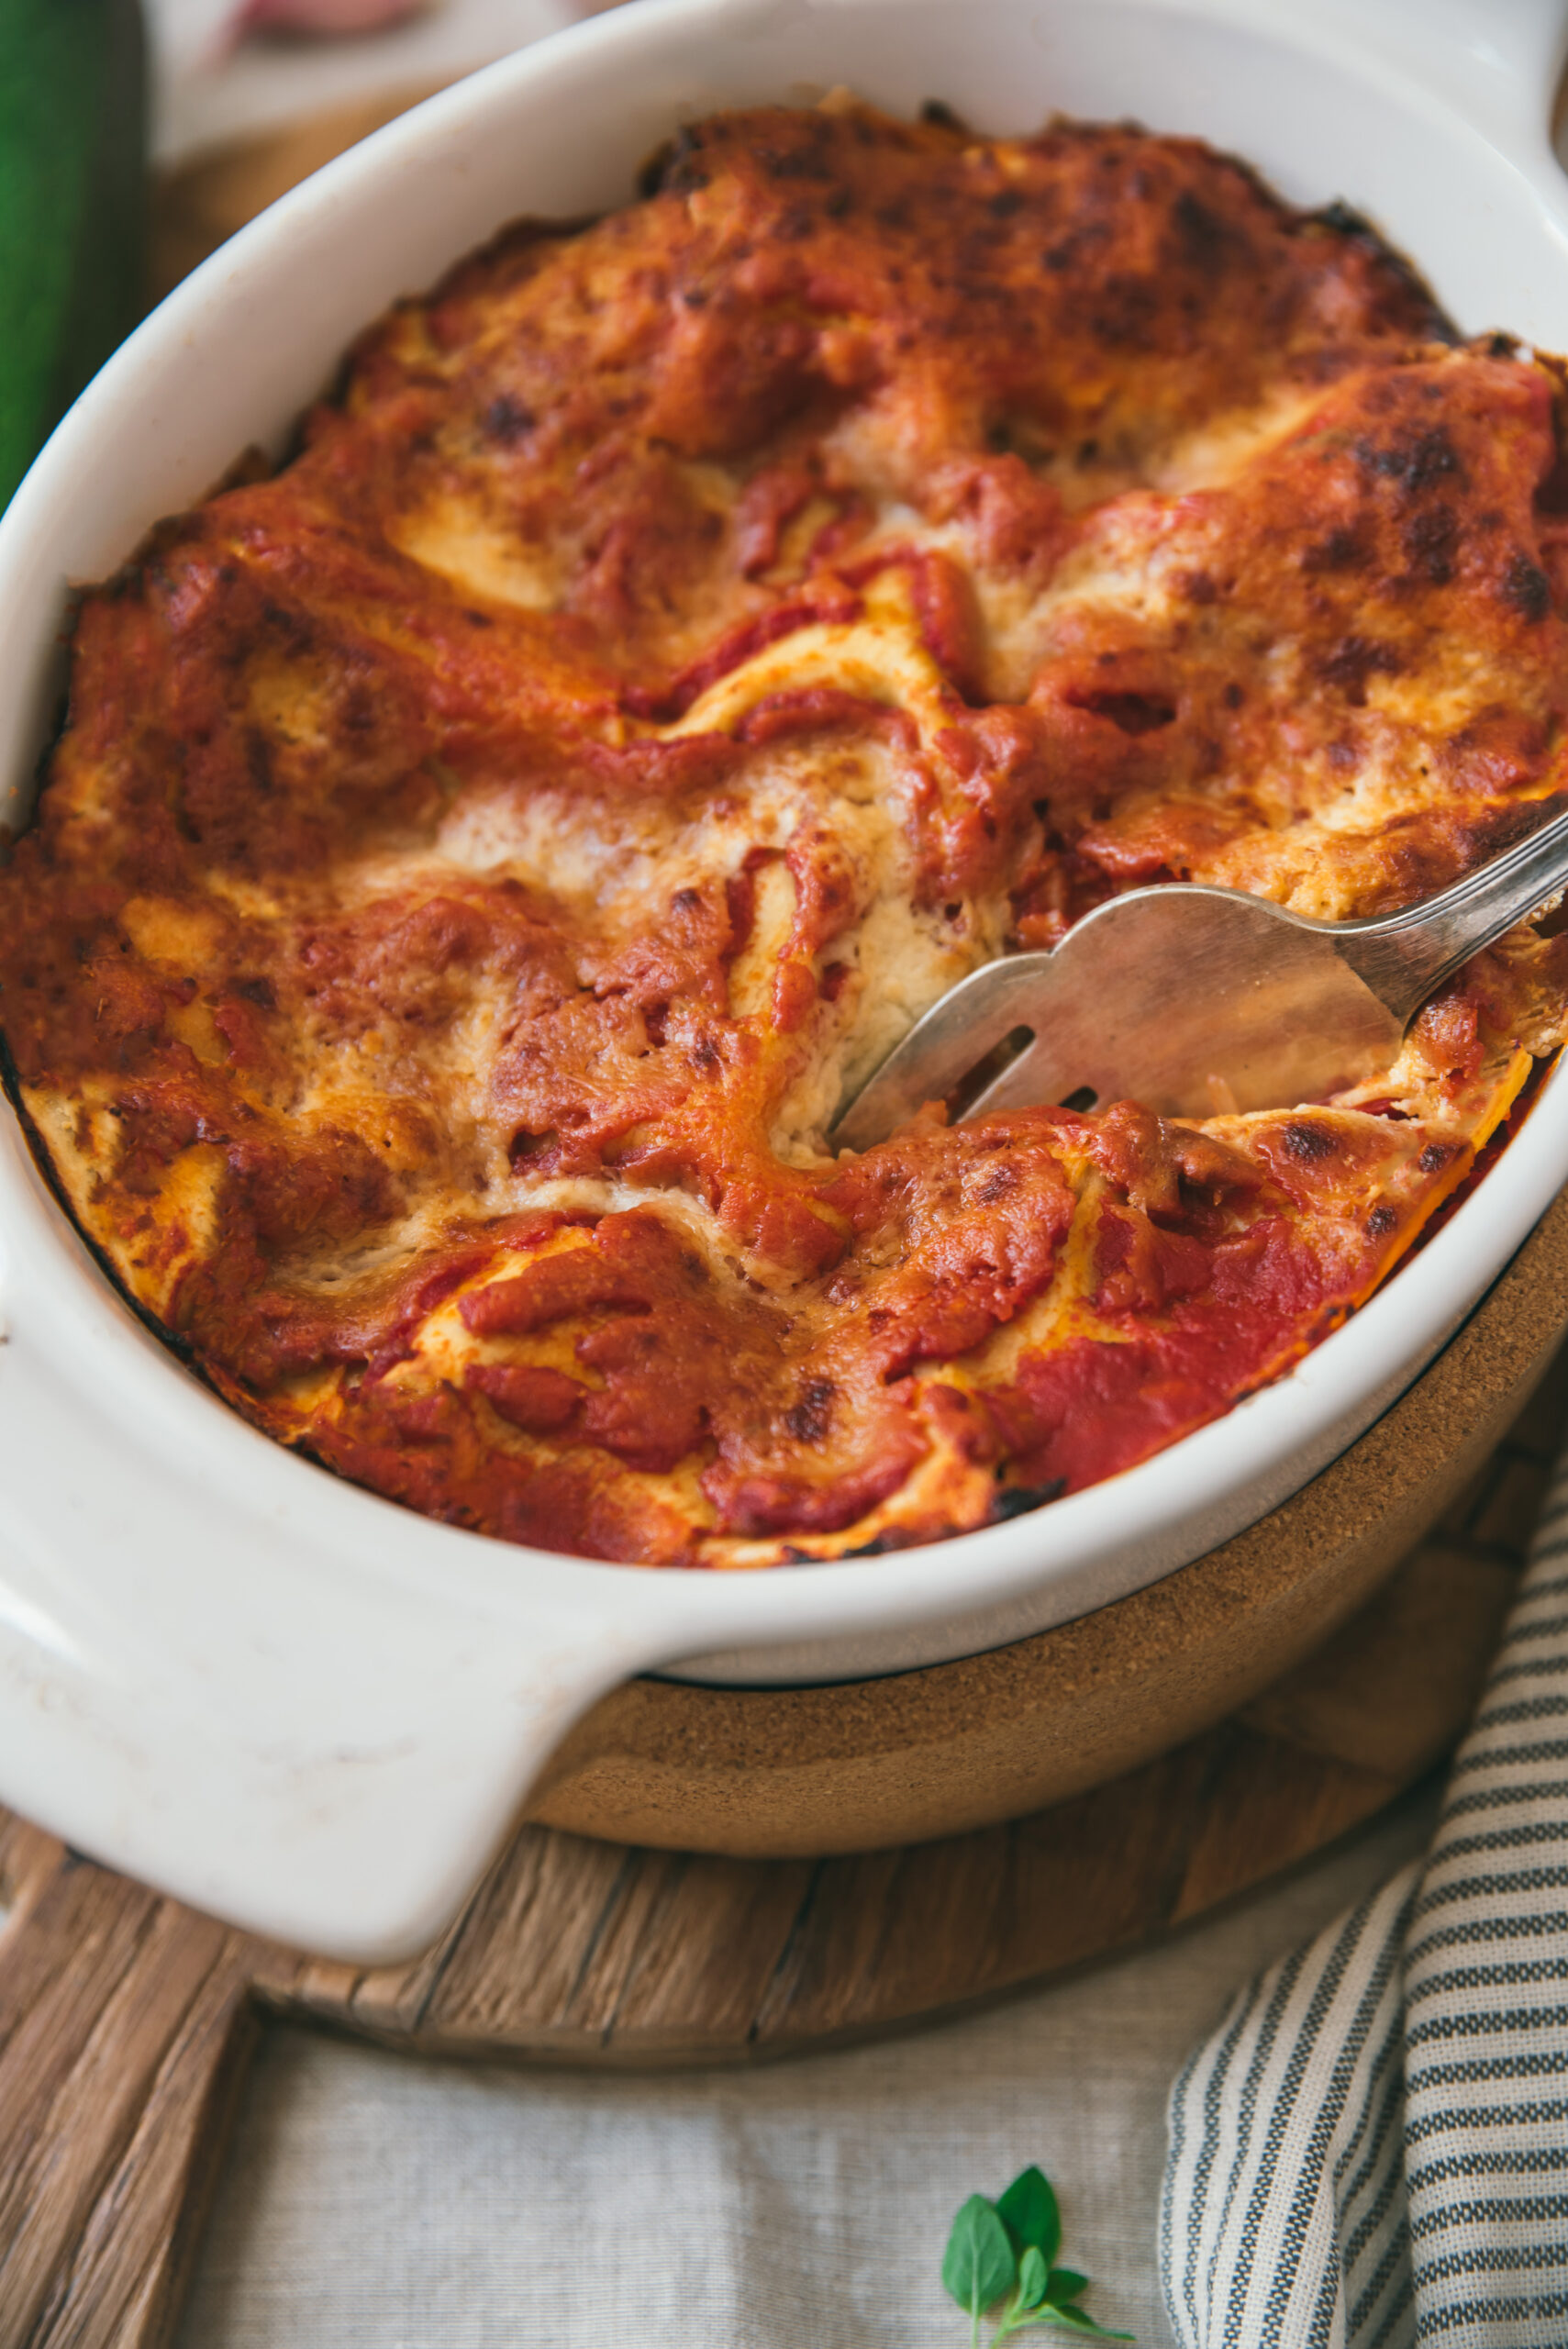 recette lasagne courgette ricotta sauce tomate